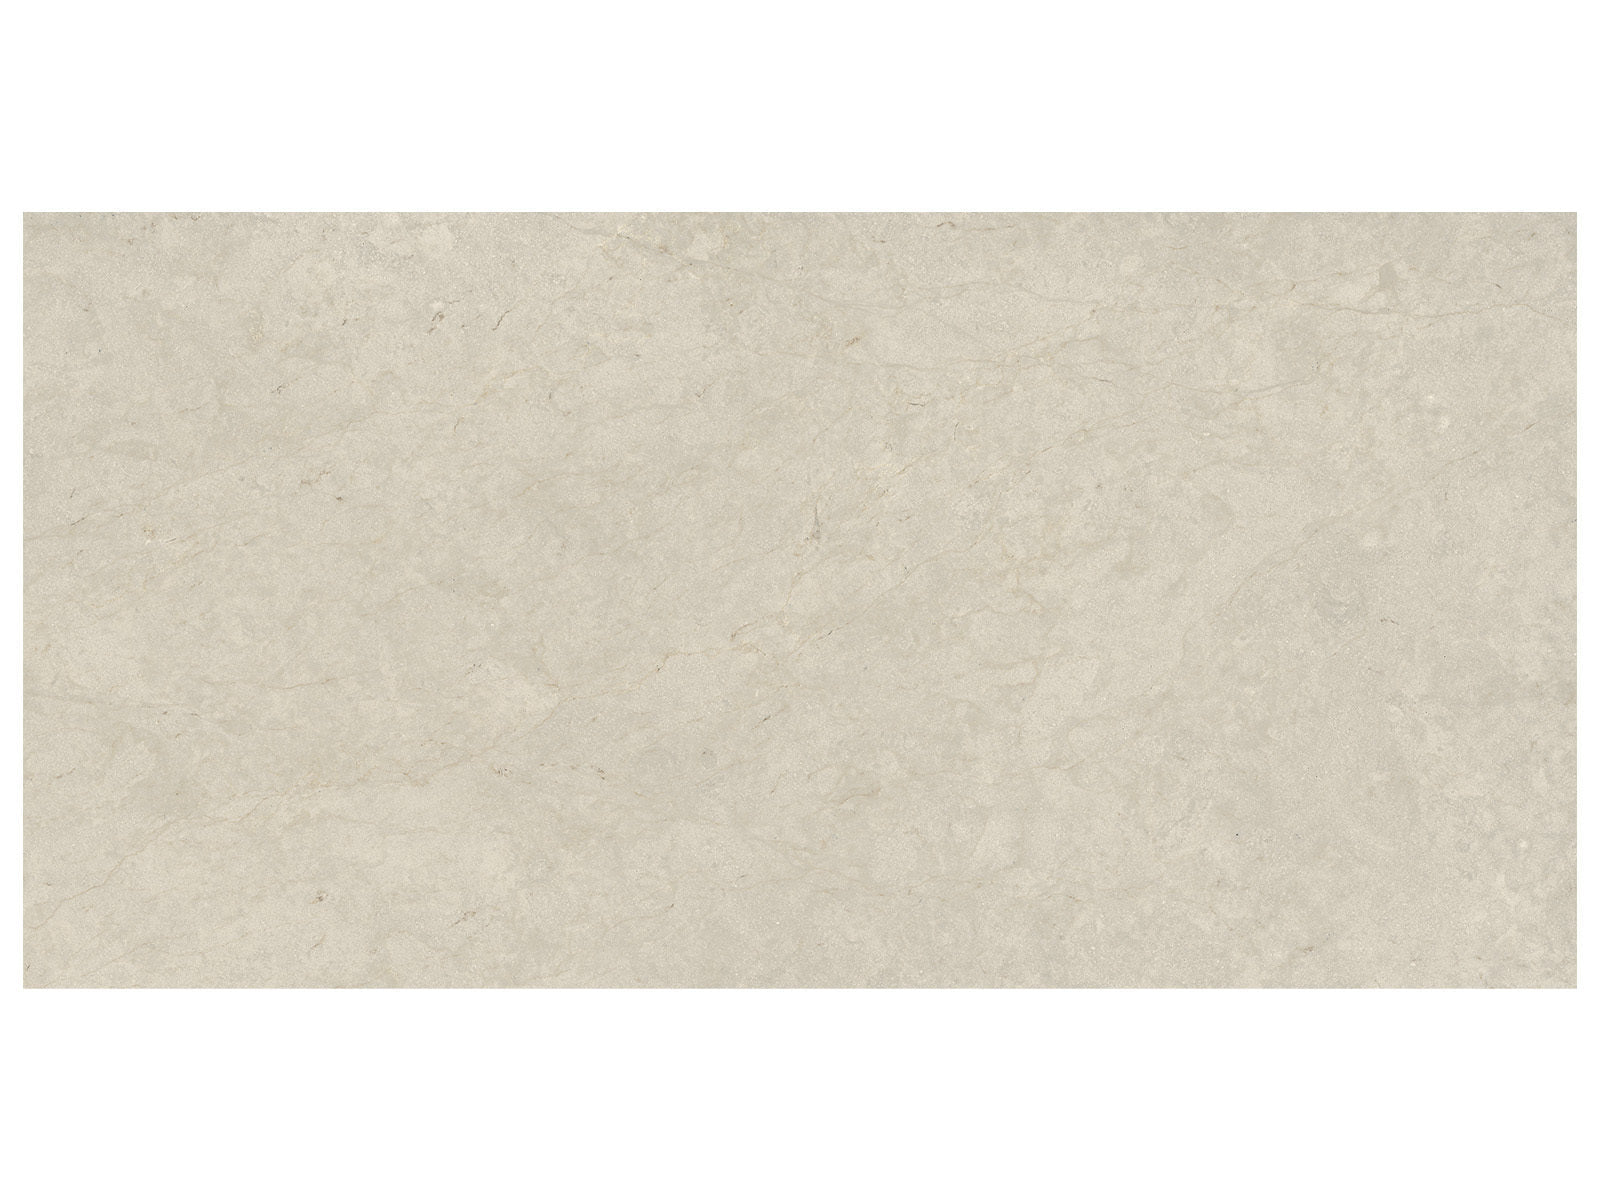 surface group anatolia limestone tierra halo natural stone field tile honed straight edge rectangle 12х24